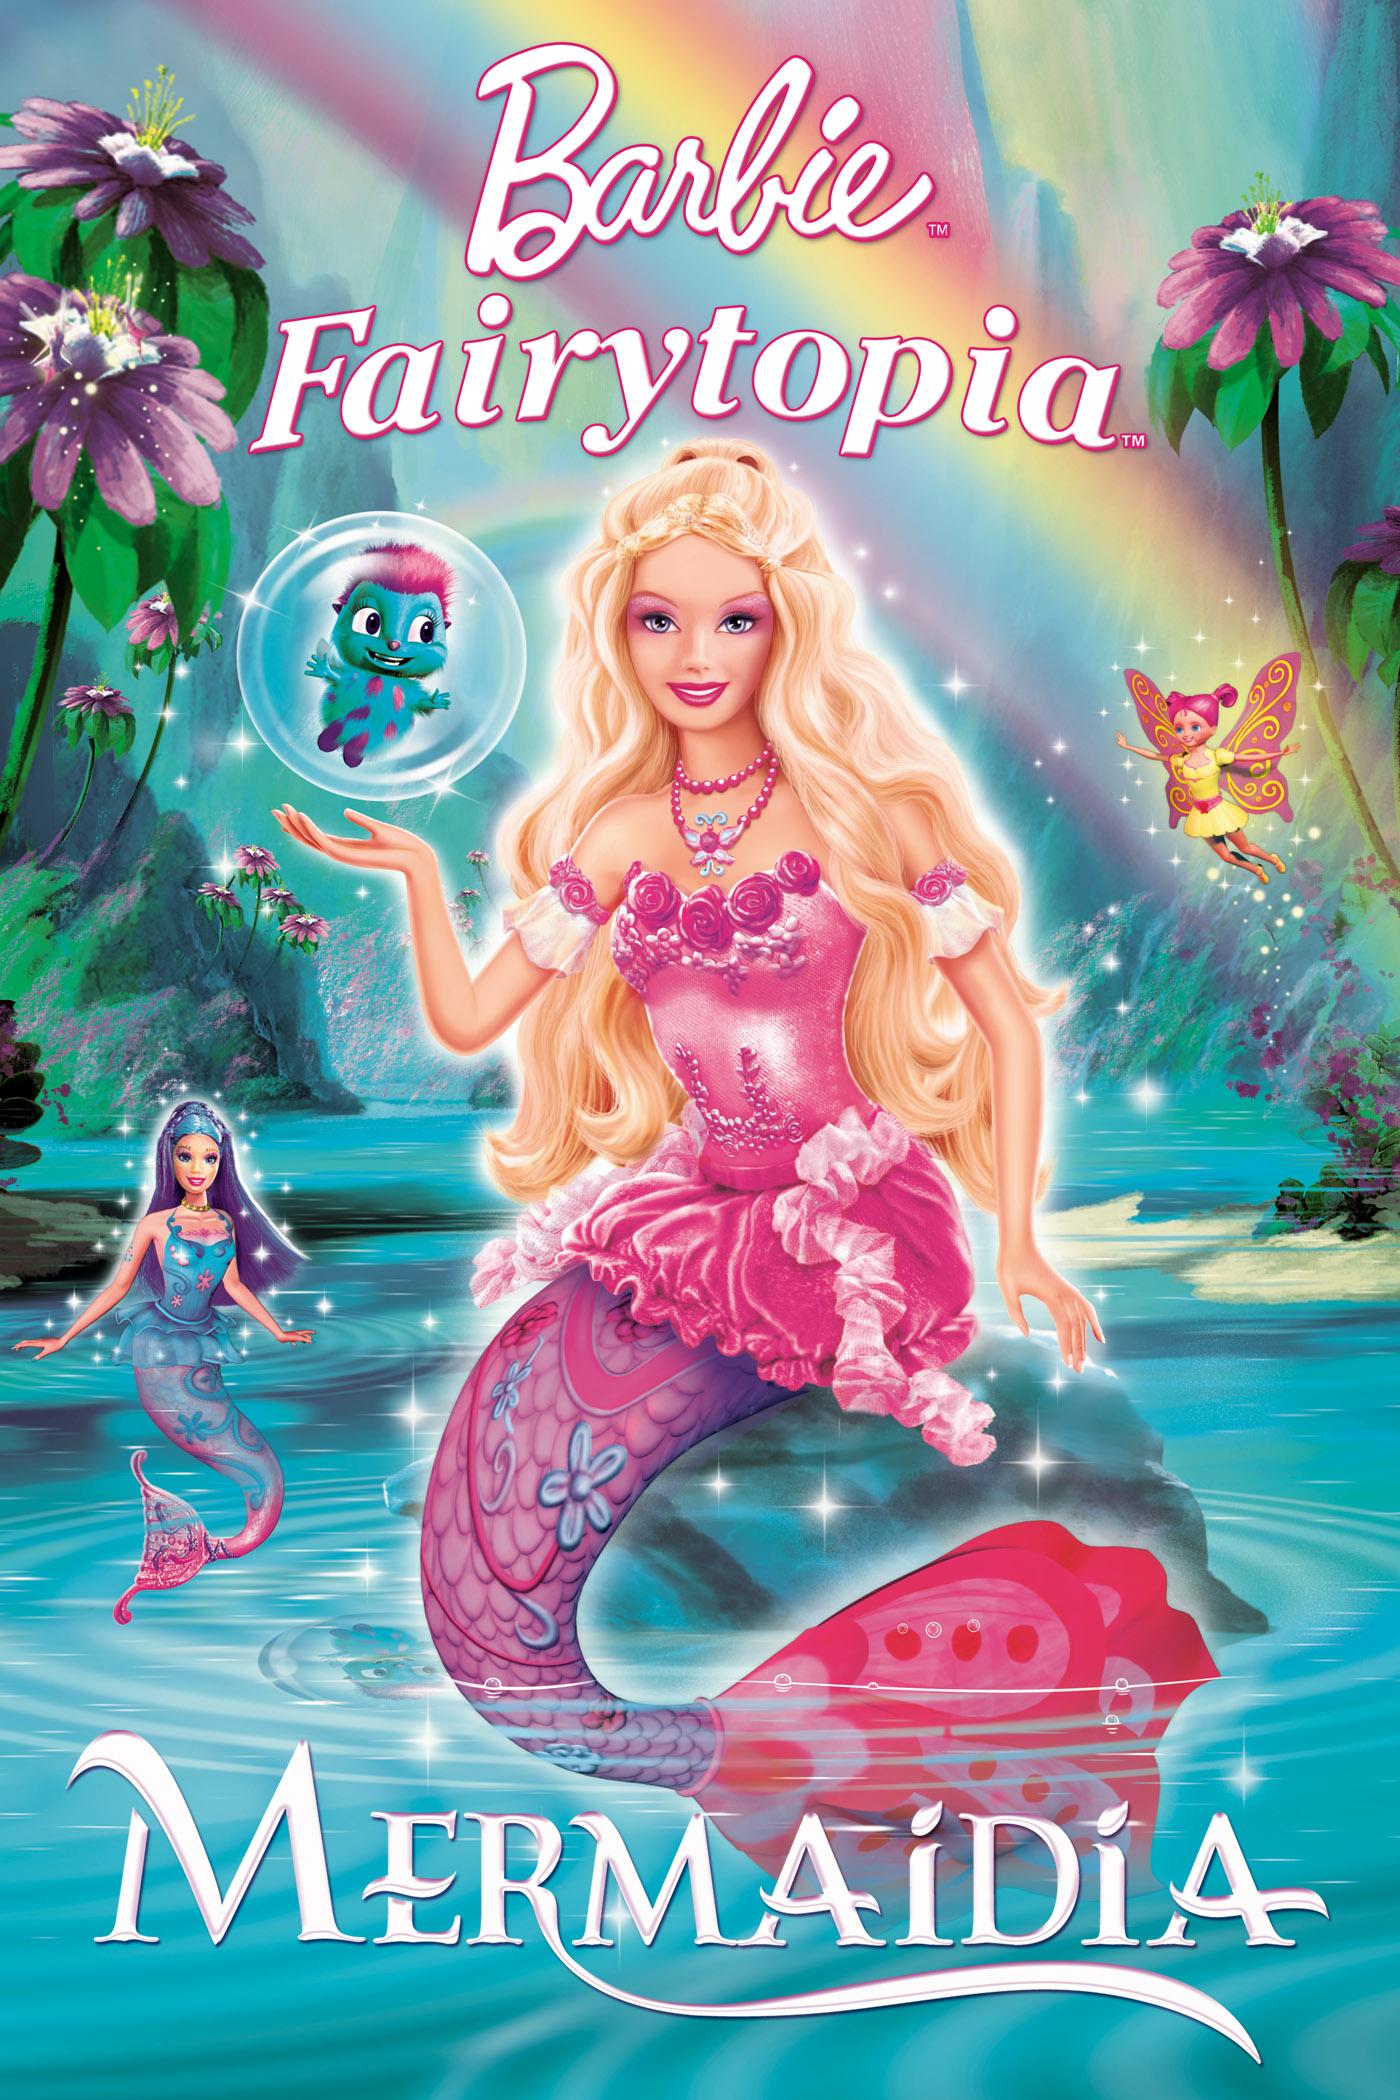 iTunes - Movies - Barbie Fairytopia: Mermaidia